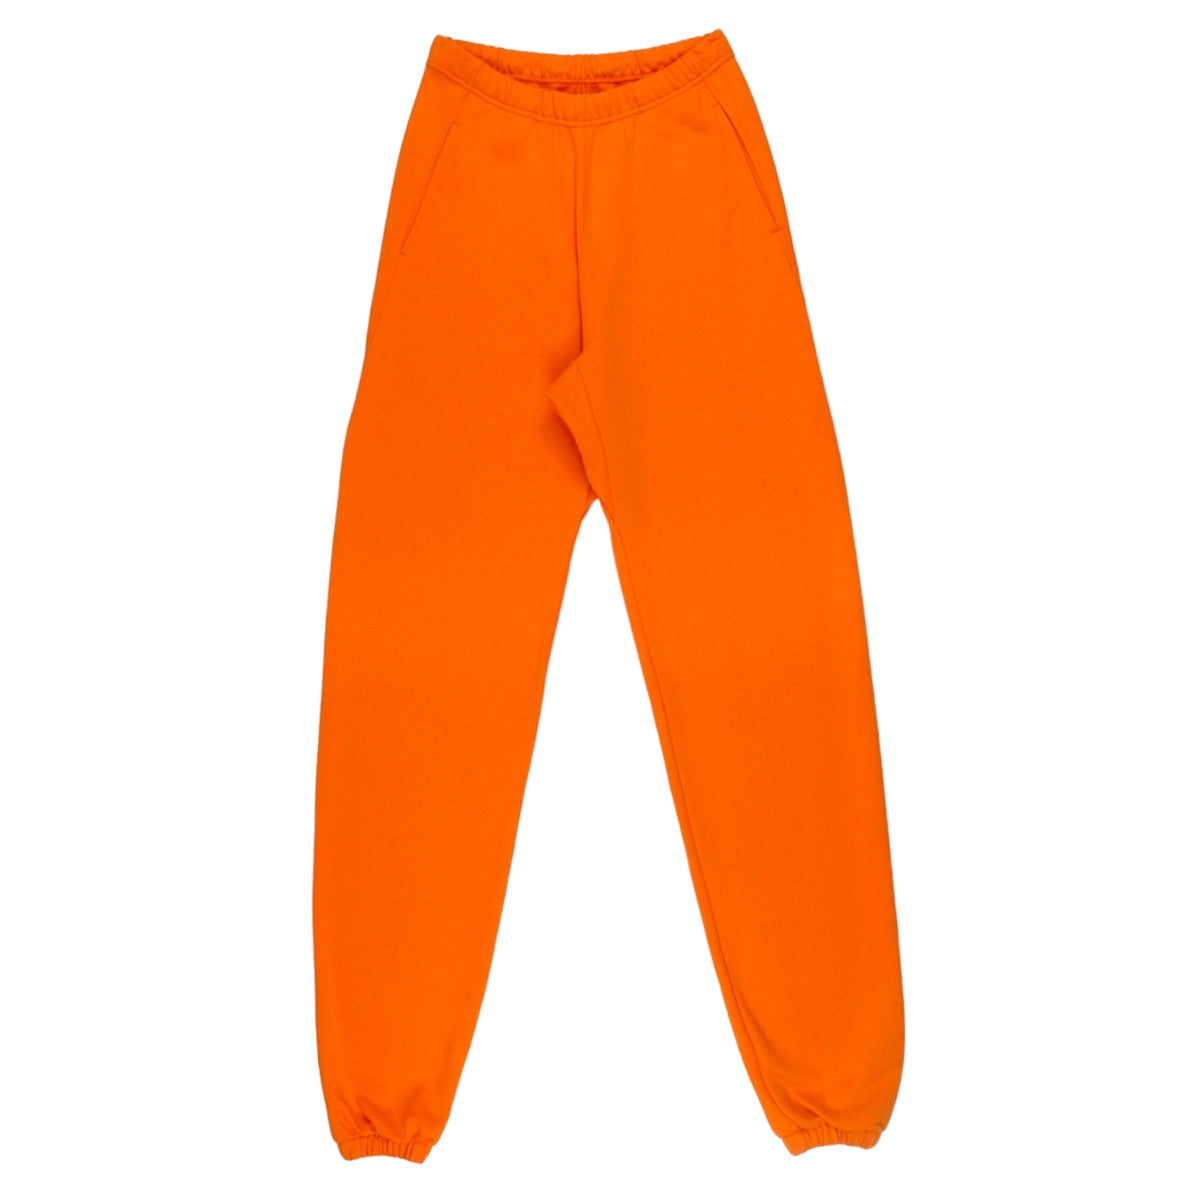 Heron Preston For Calvin Klein Orange Jogging Pants